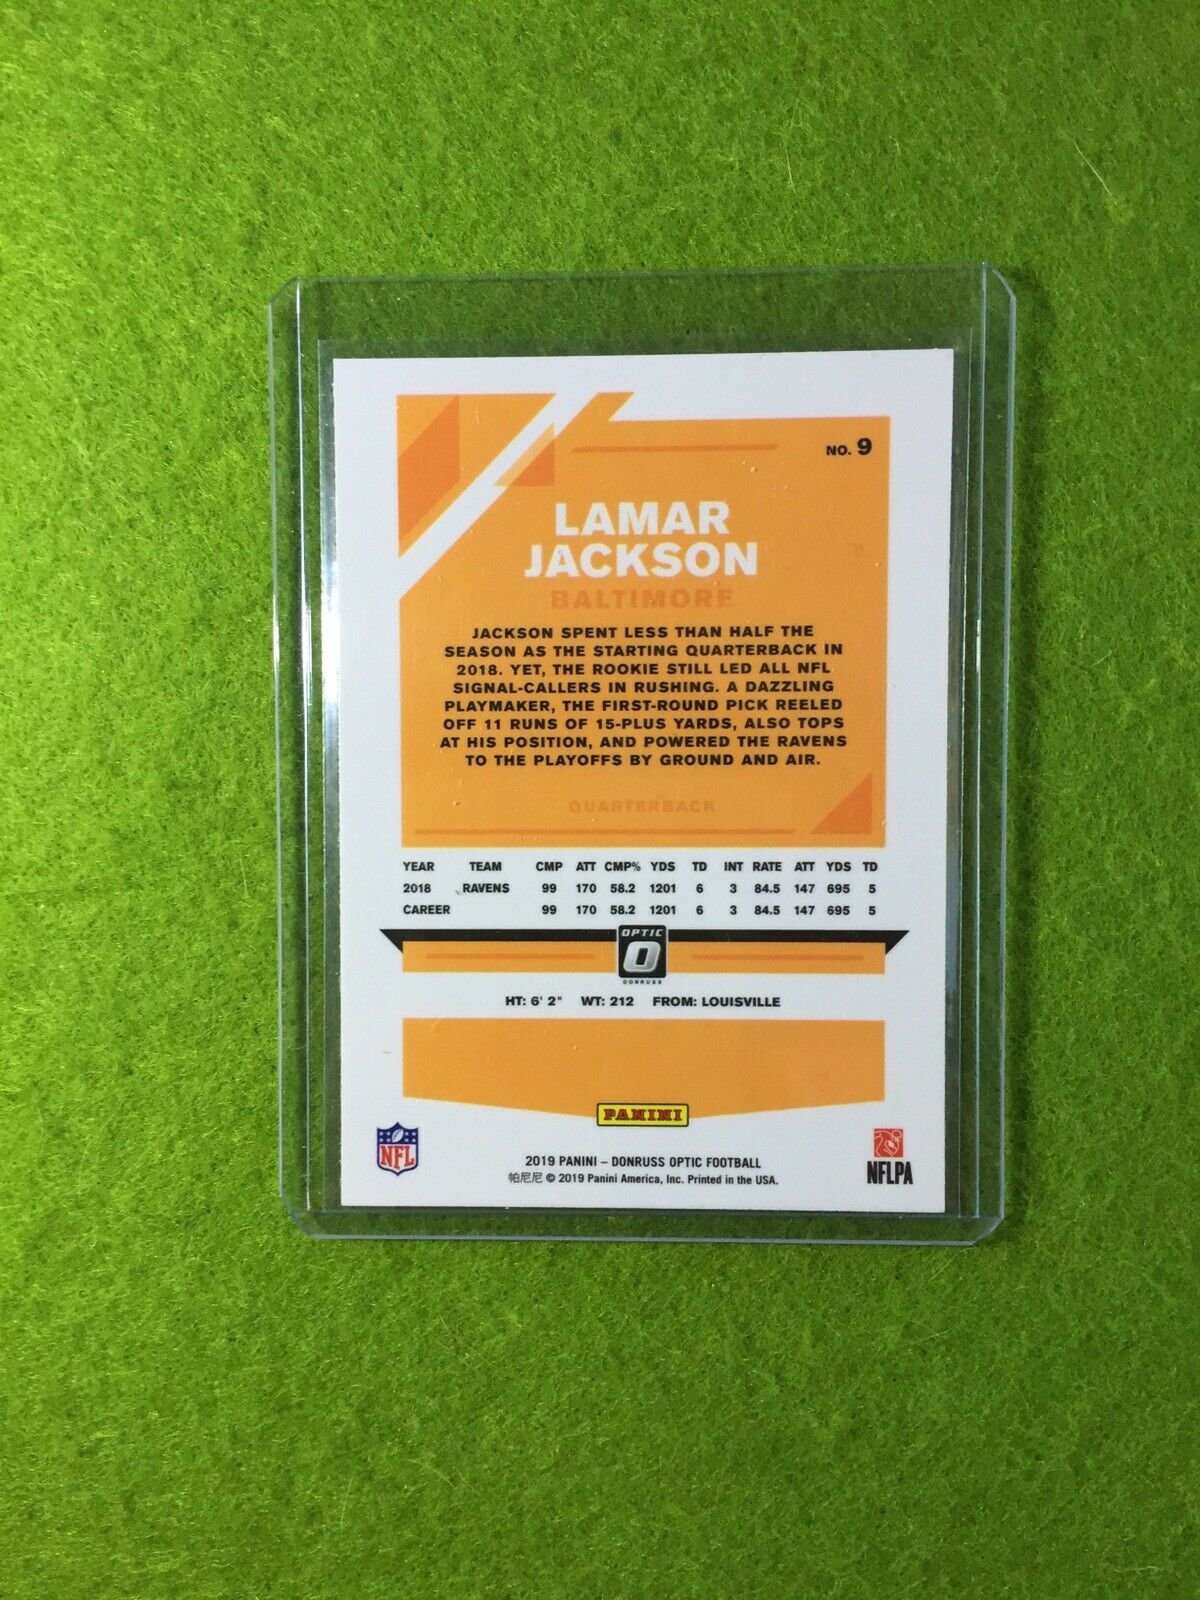 LAMAR JACKSON OPTIC CARD JERSEY #8 BALTIMORE RAVENS 2019 Donruss Optic Football